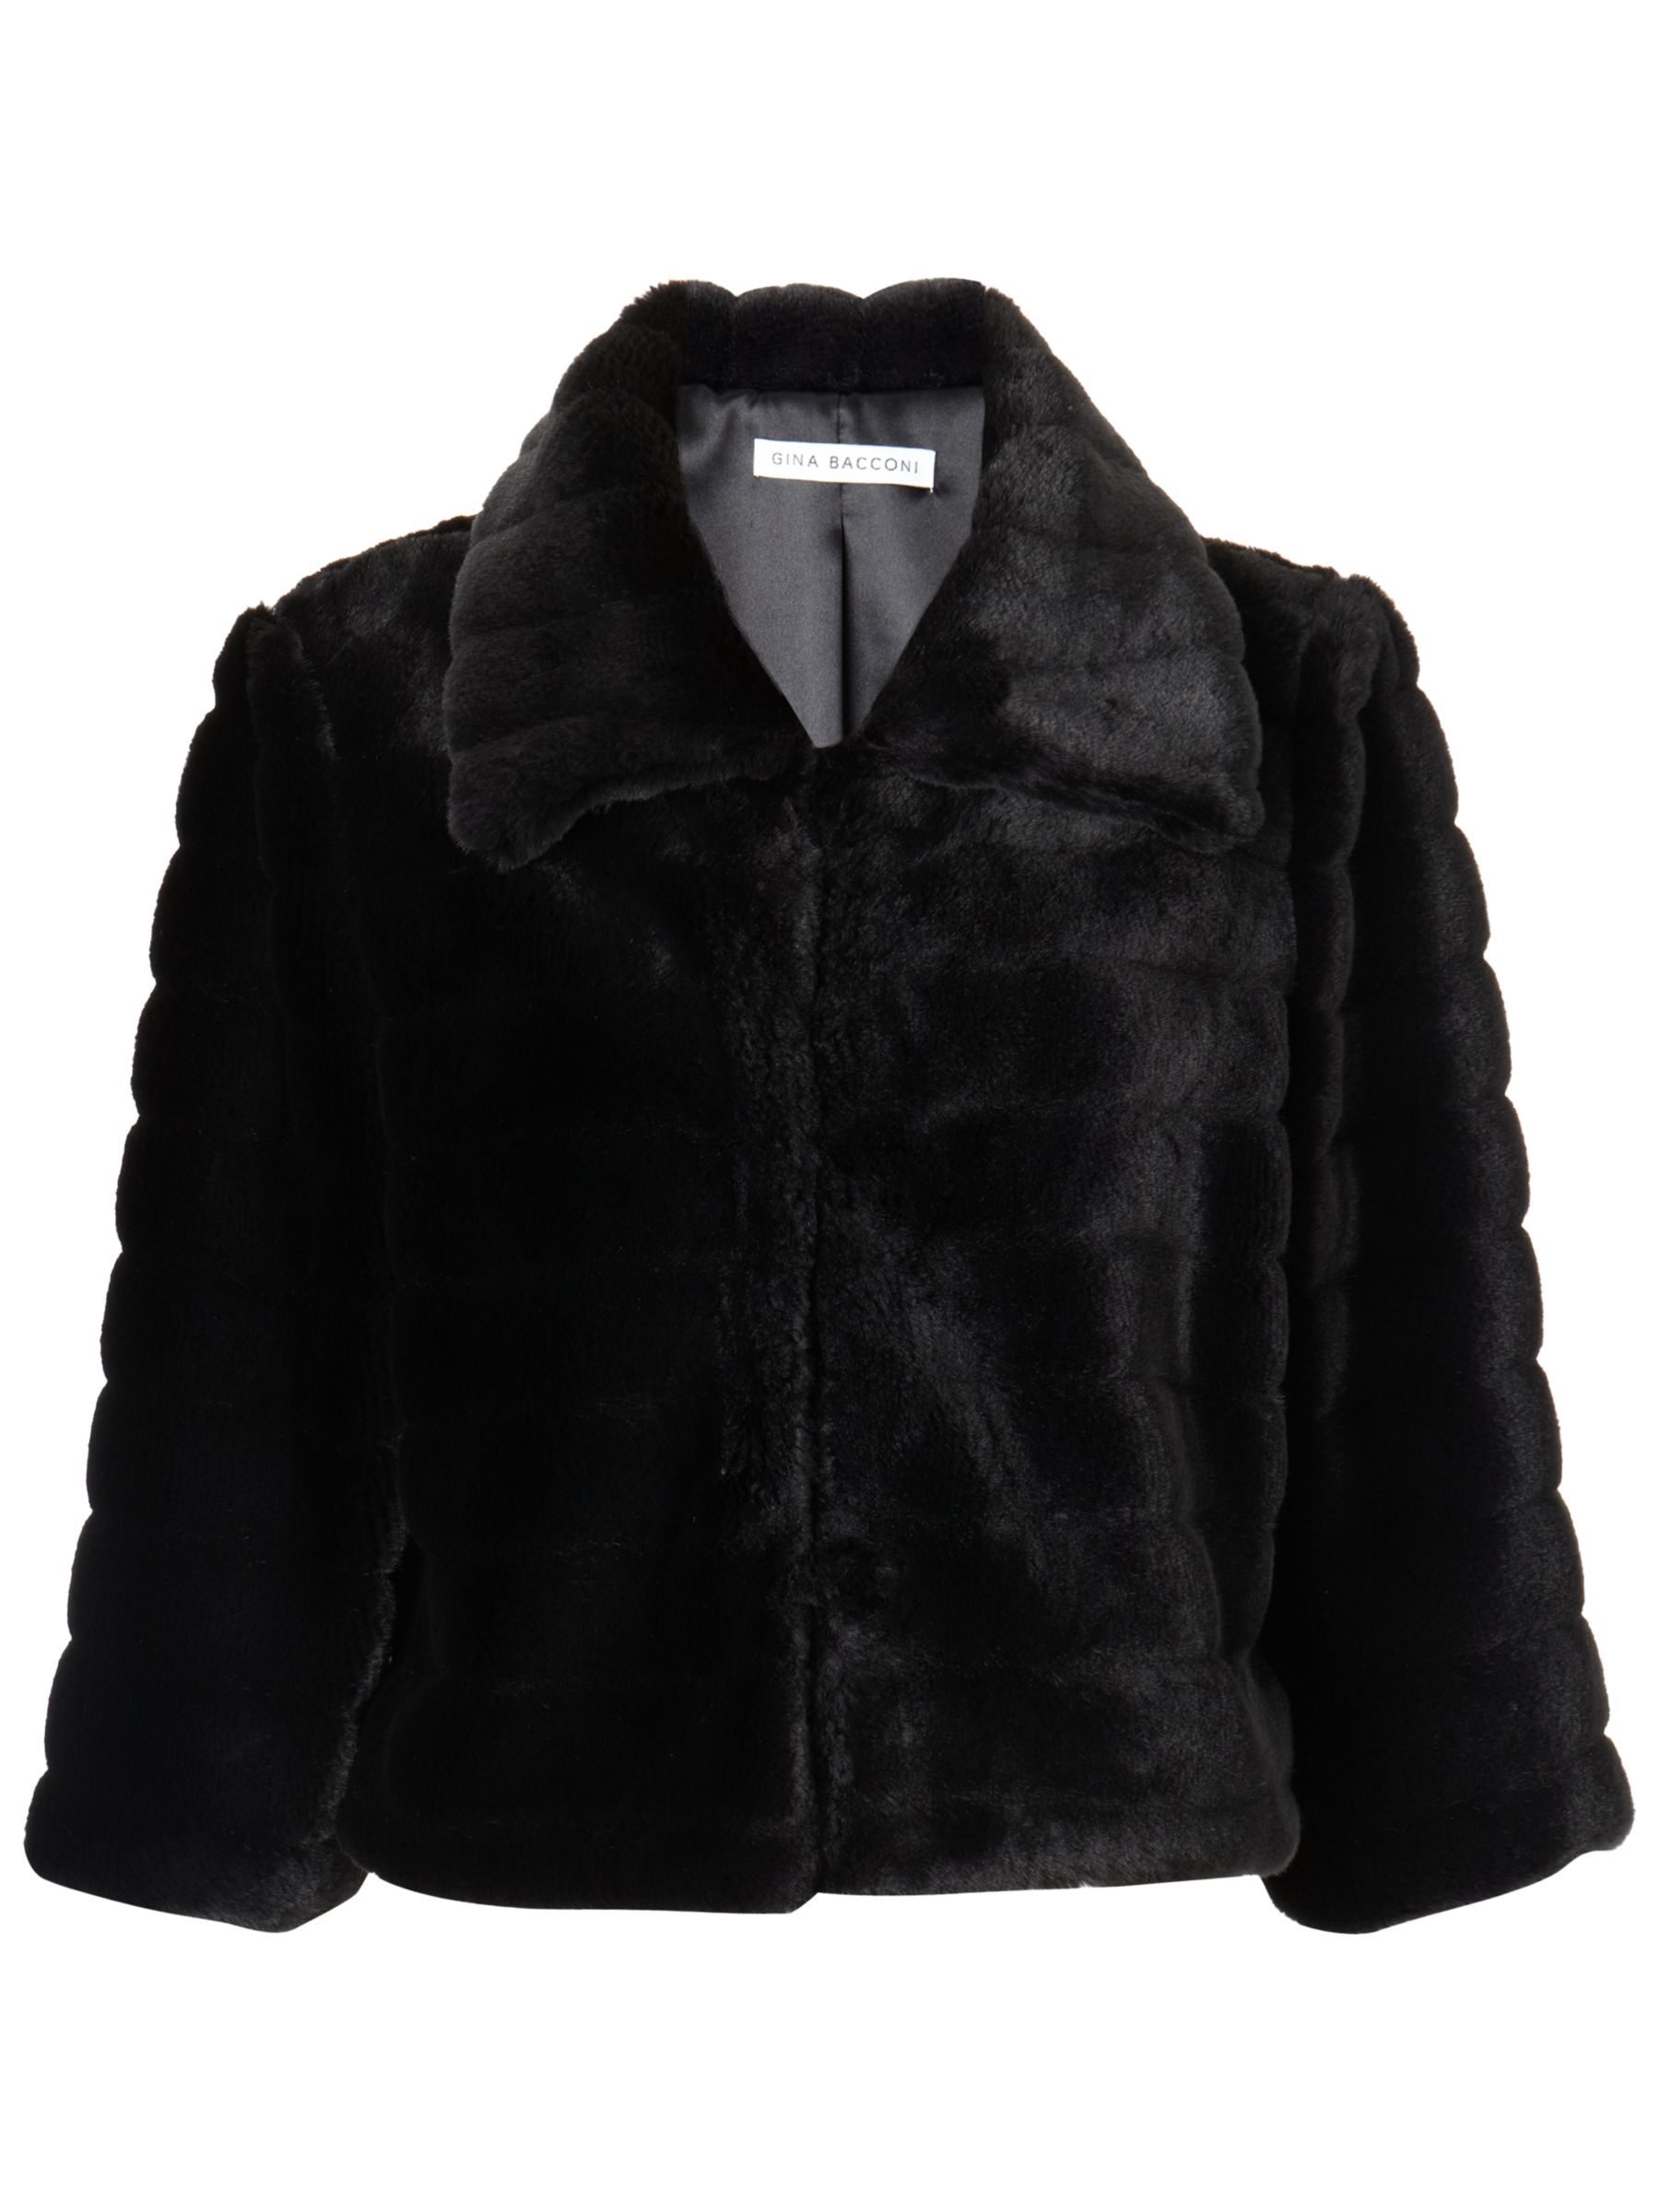 Gina Bacconi Faux Fur Jacket, Black